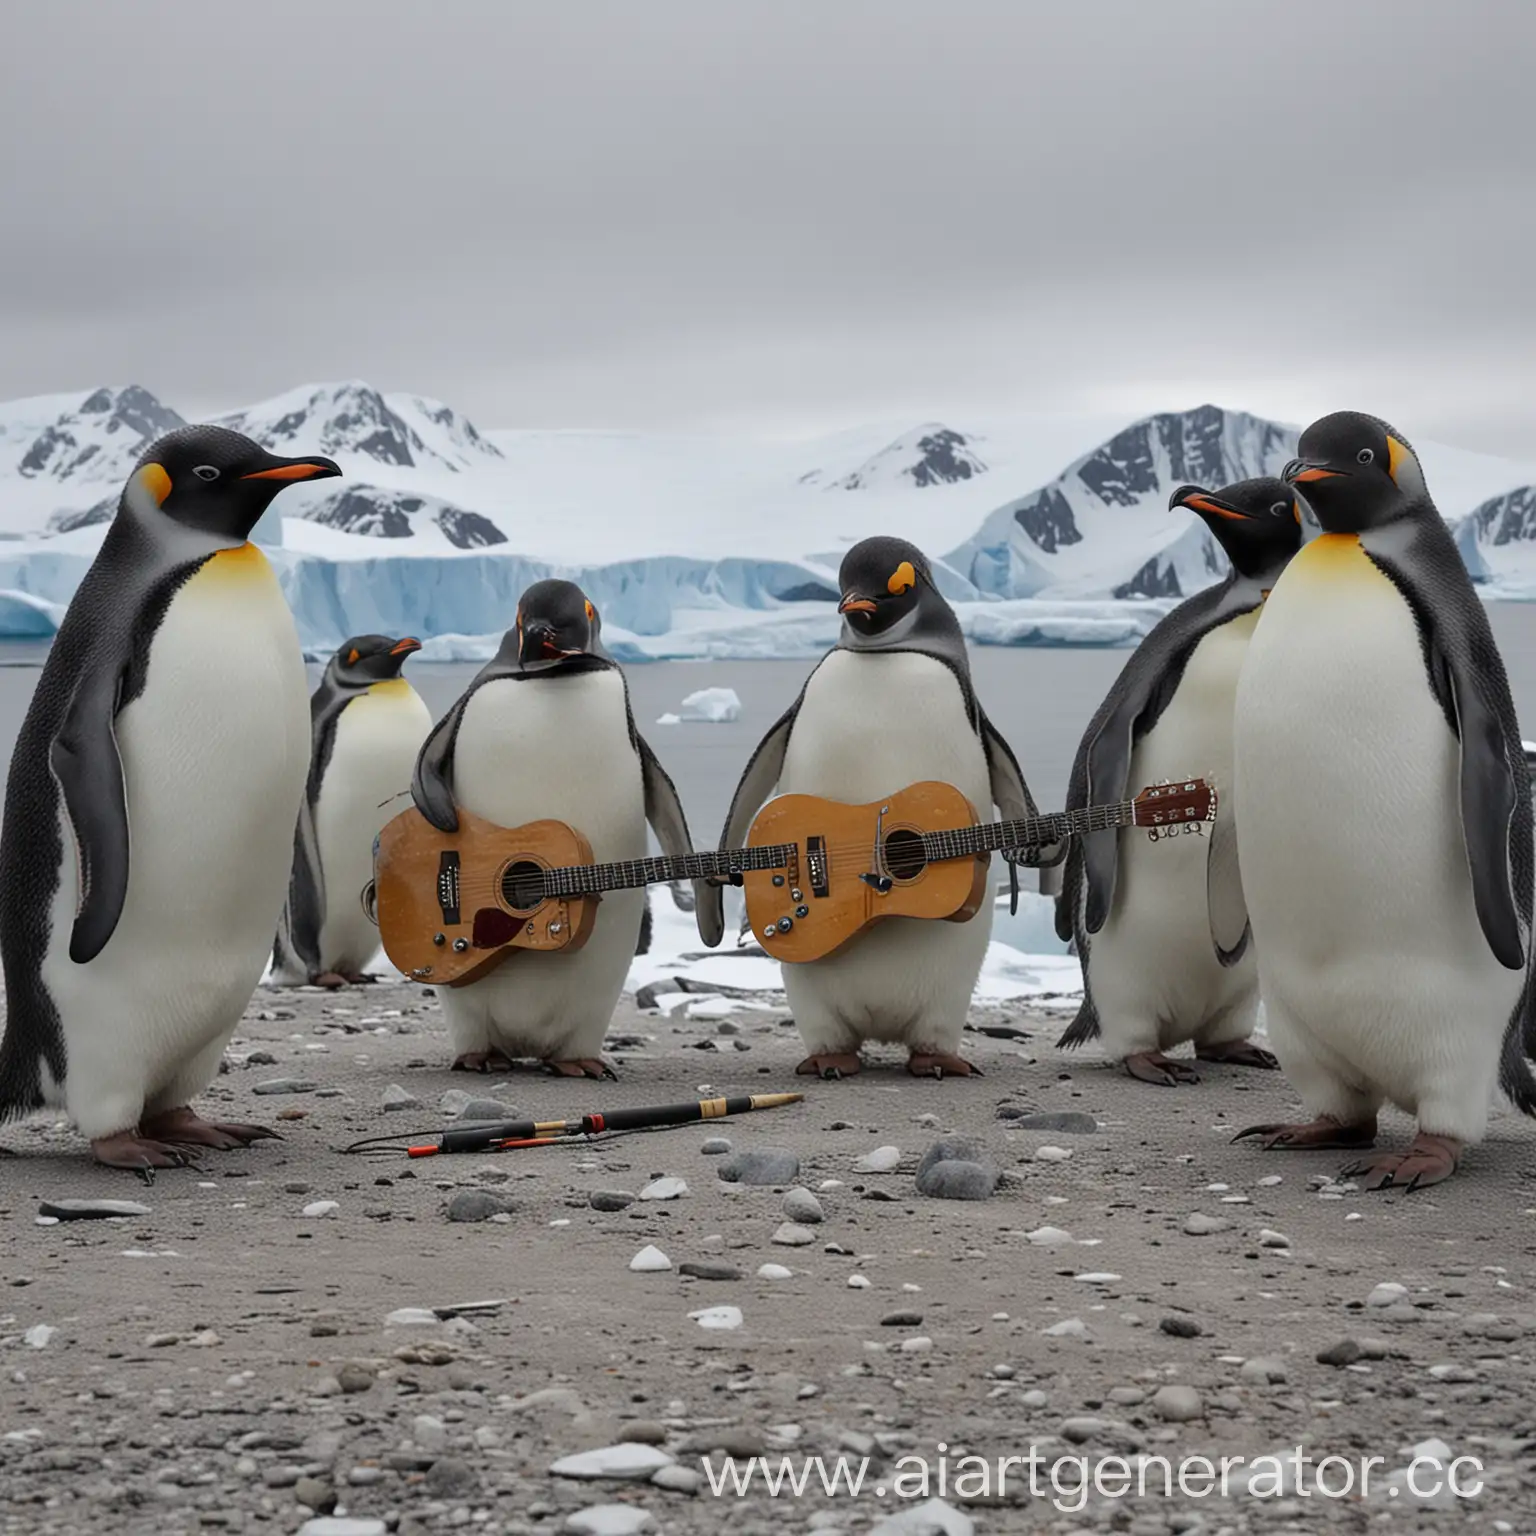 Antarctic-Penguin-Guitarists-Performing-Concert